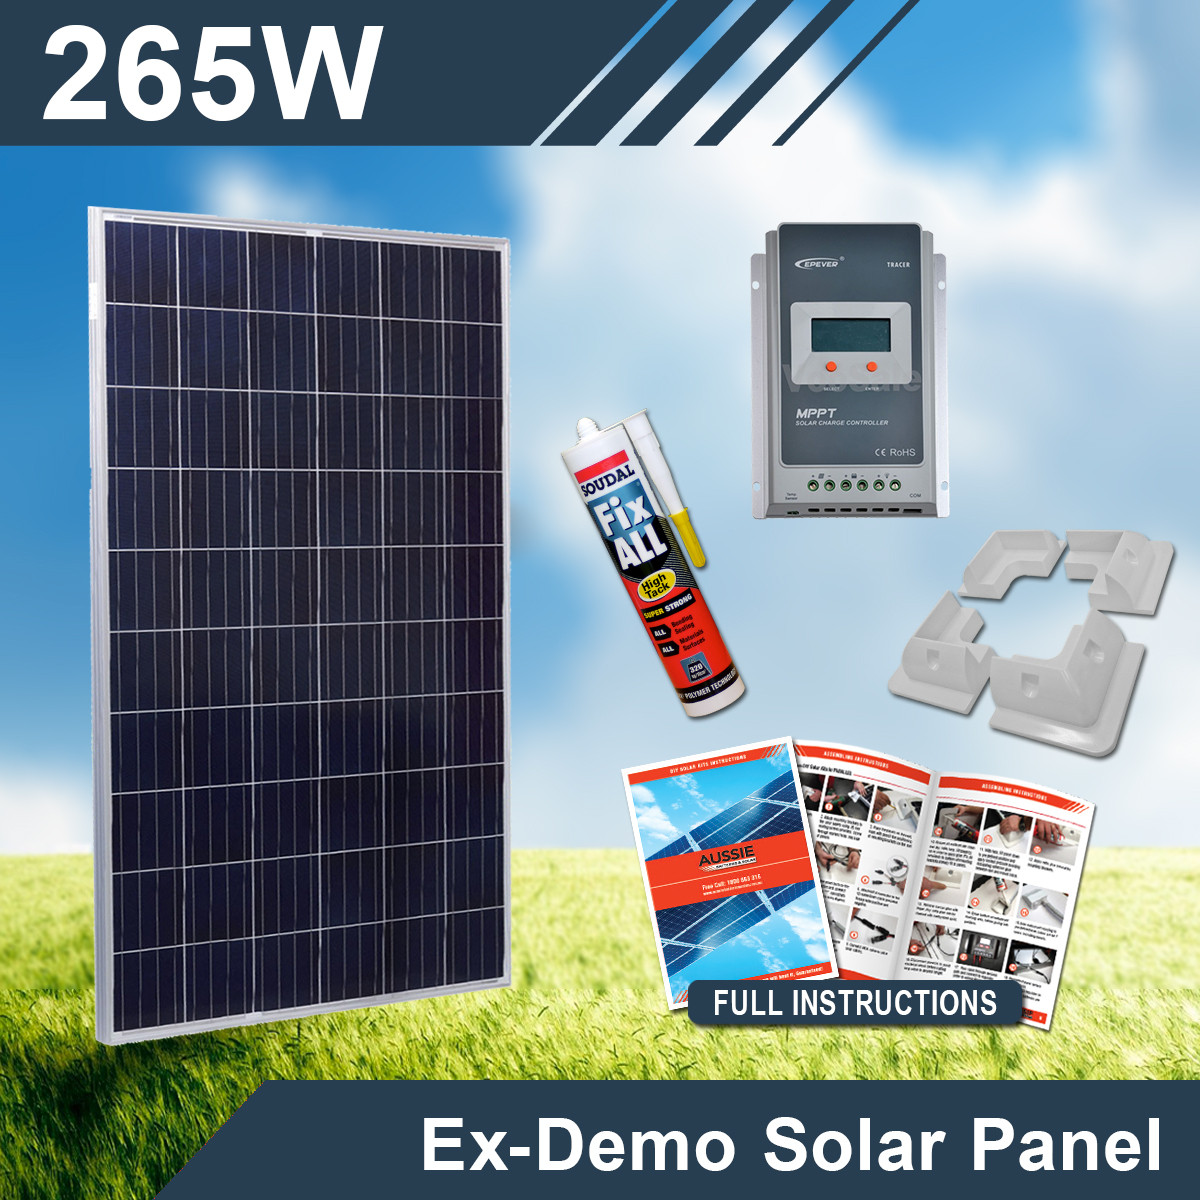 Best ideas about DIY Solar Kit
. Save or Pin 265W 12V Ex Demo plete DIY Solar Kit Now.